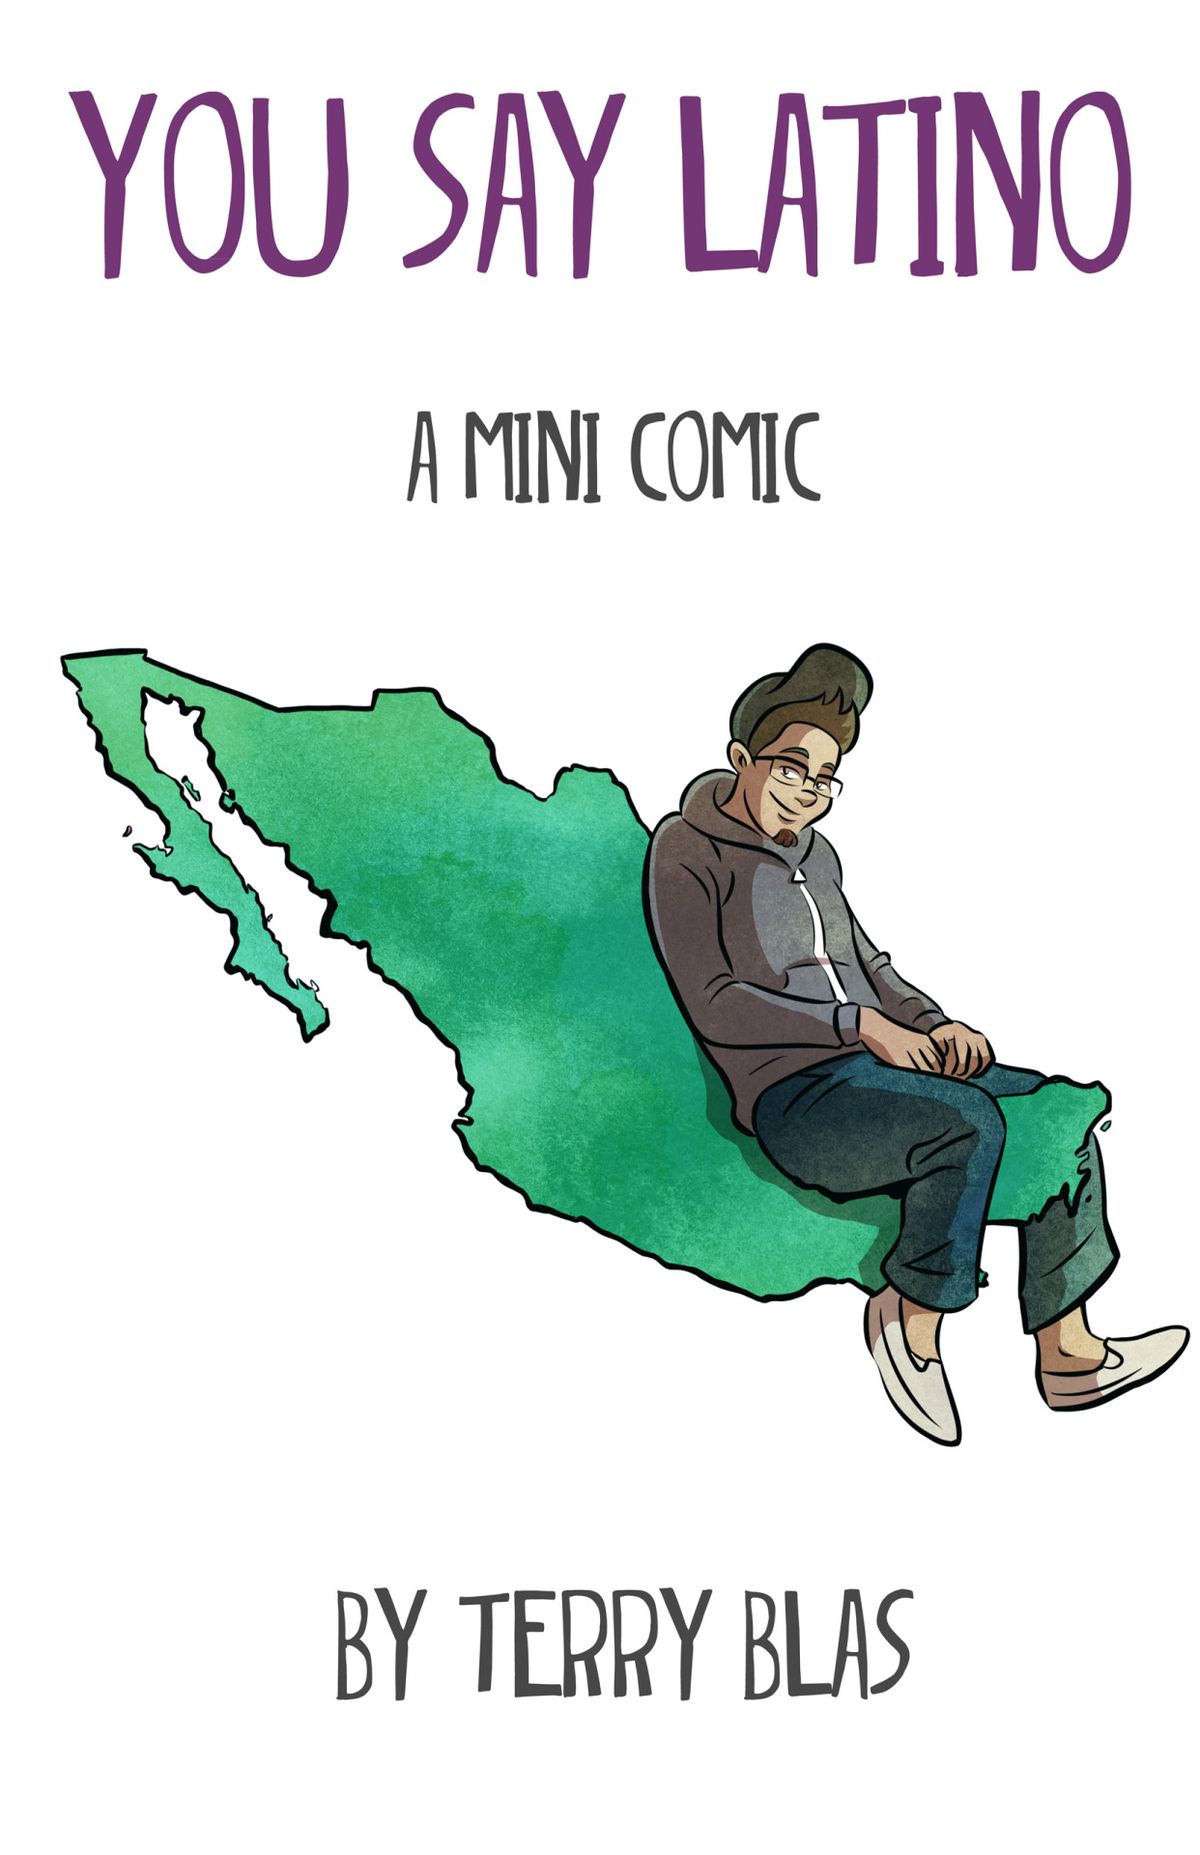 terry blas comics latino